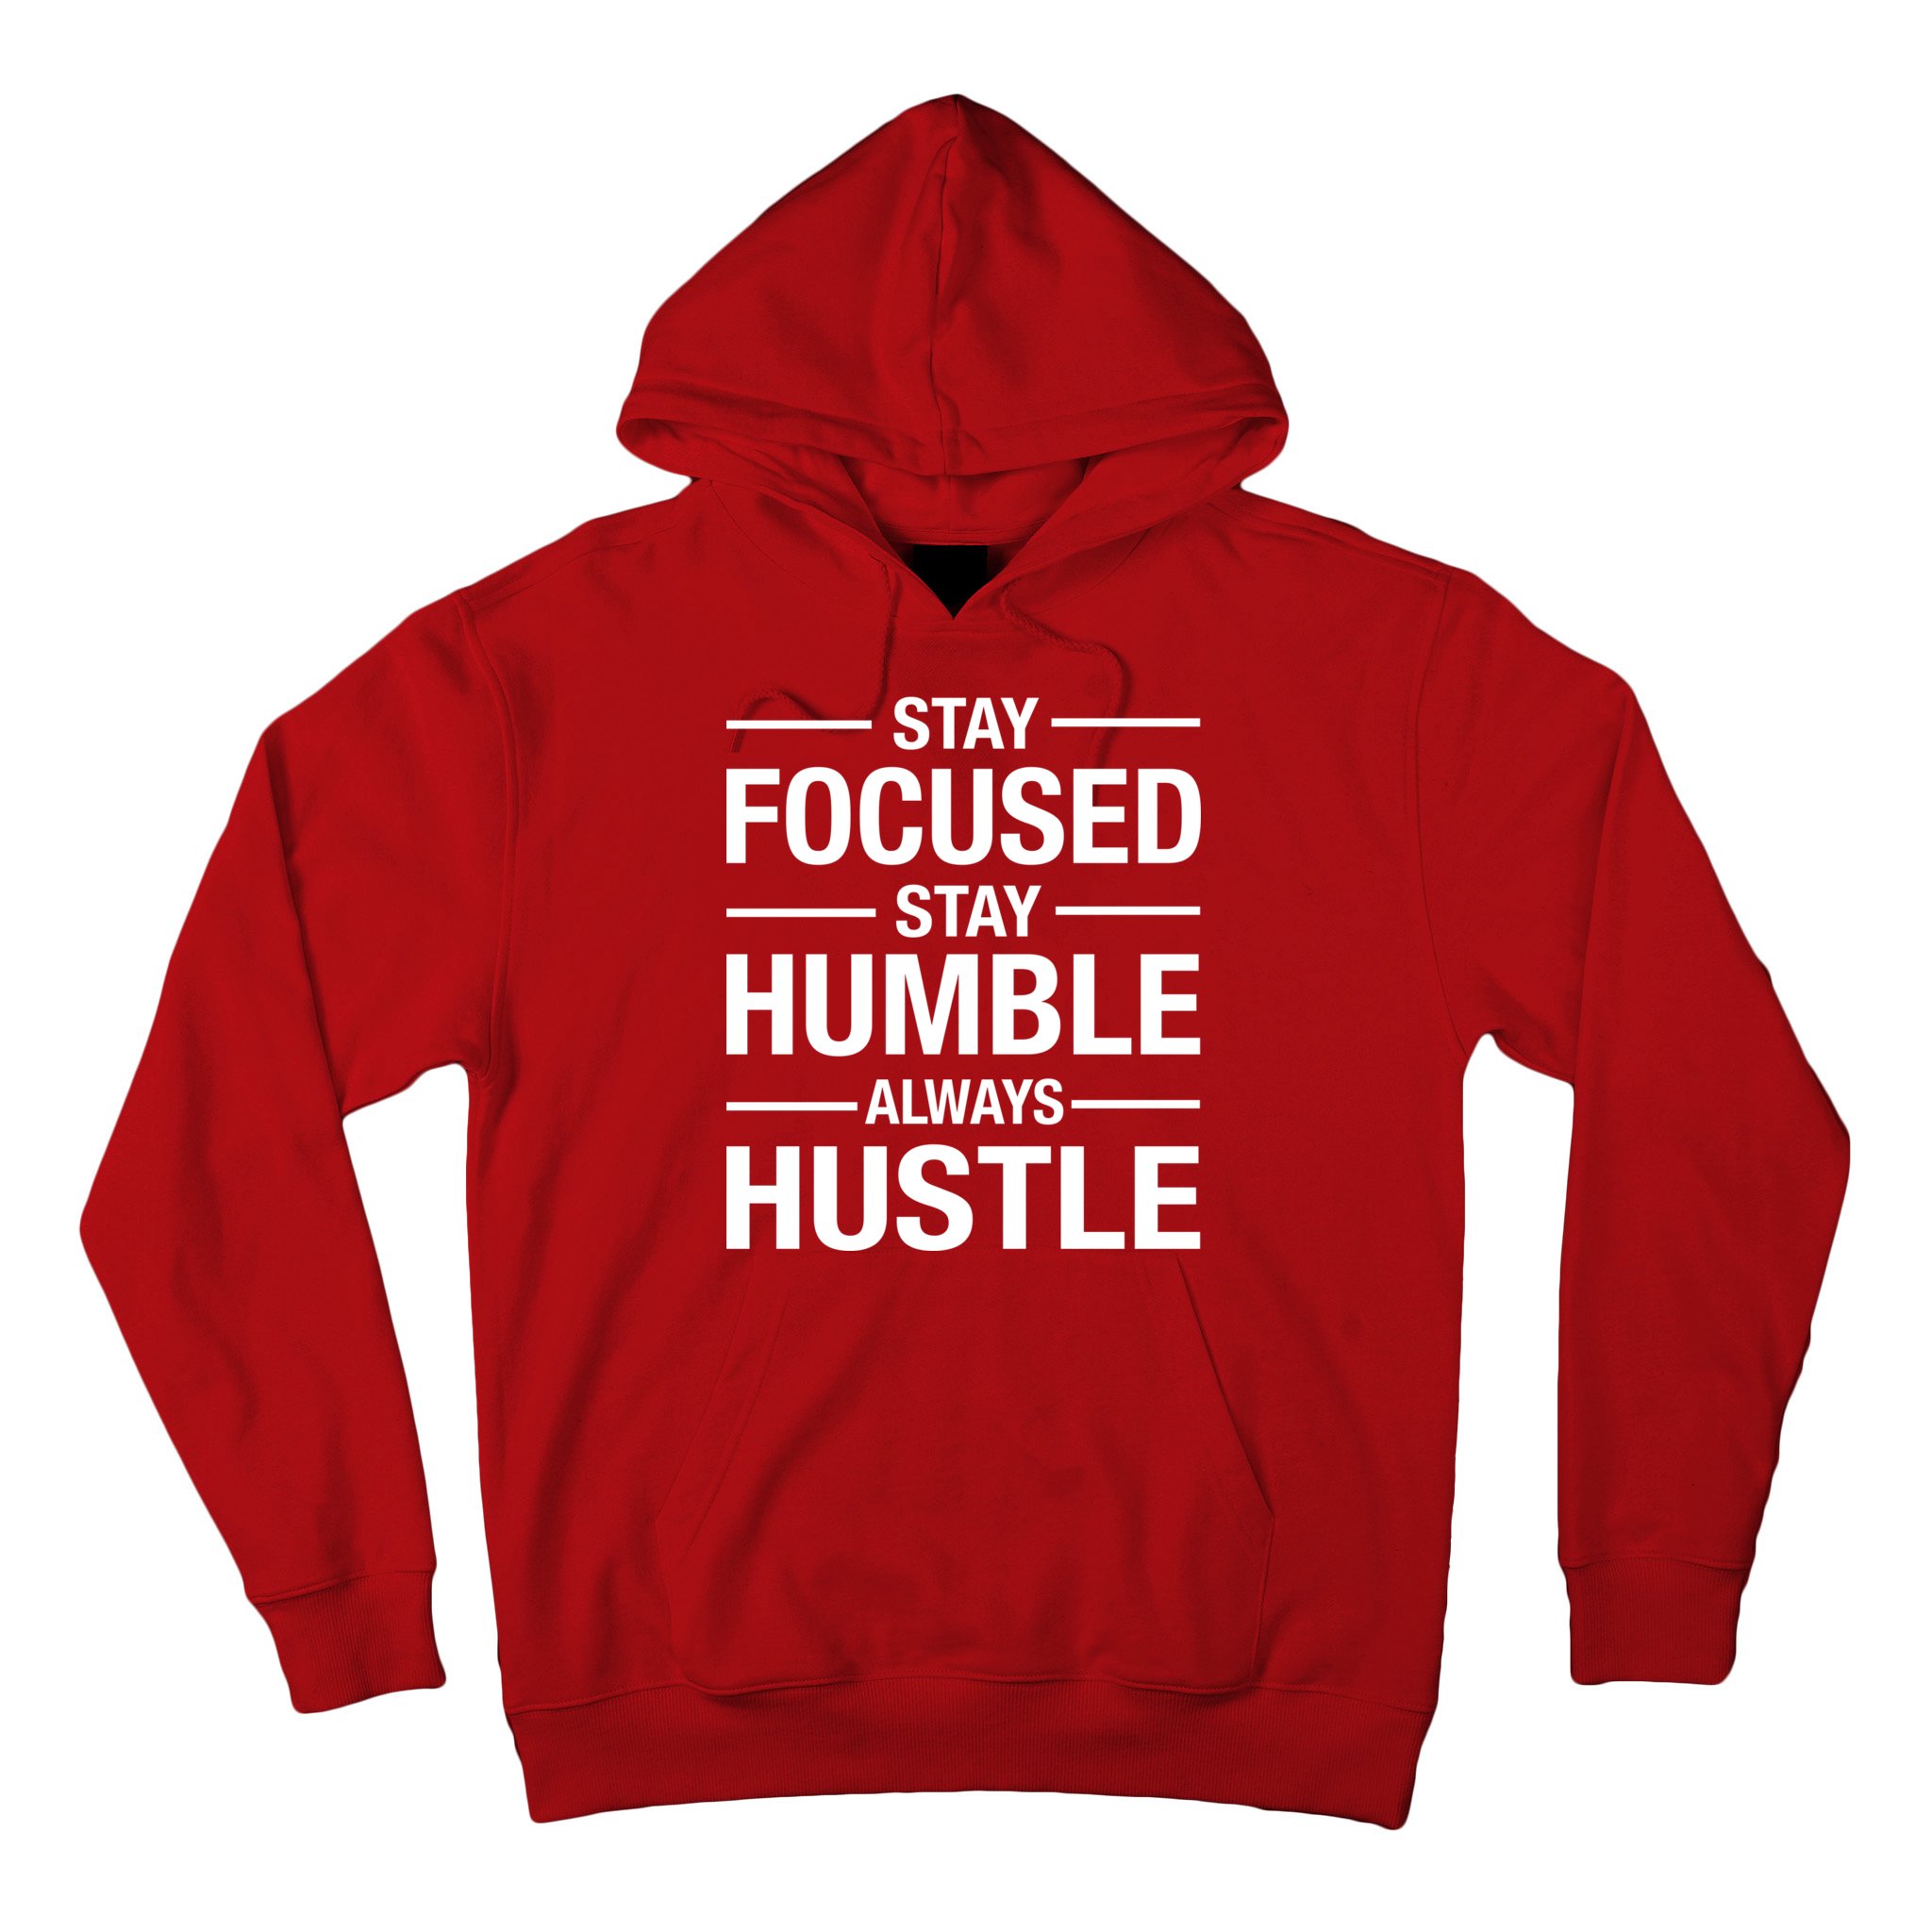 Stay Humble Hustle Hard - Humble Hustle Hoodie Sweatshirt